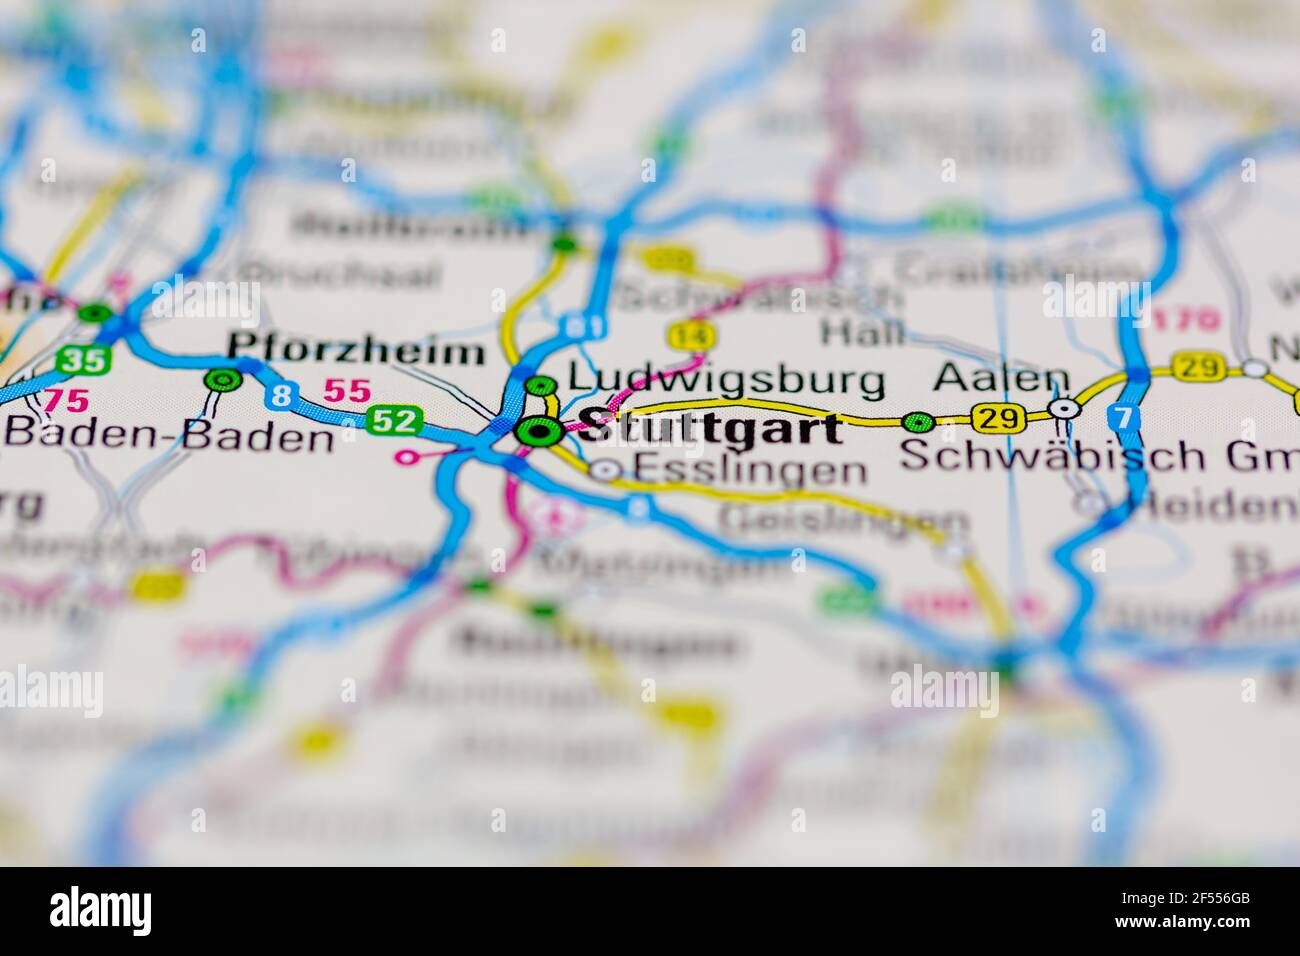 Stuttgart se muestra en un mapa geográfico o mapa de carreteras Foto de stock